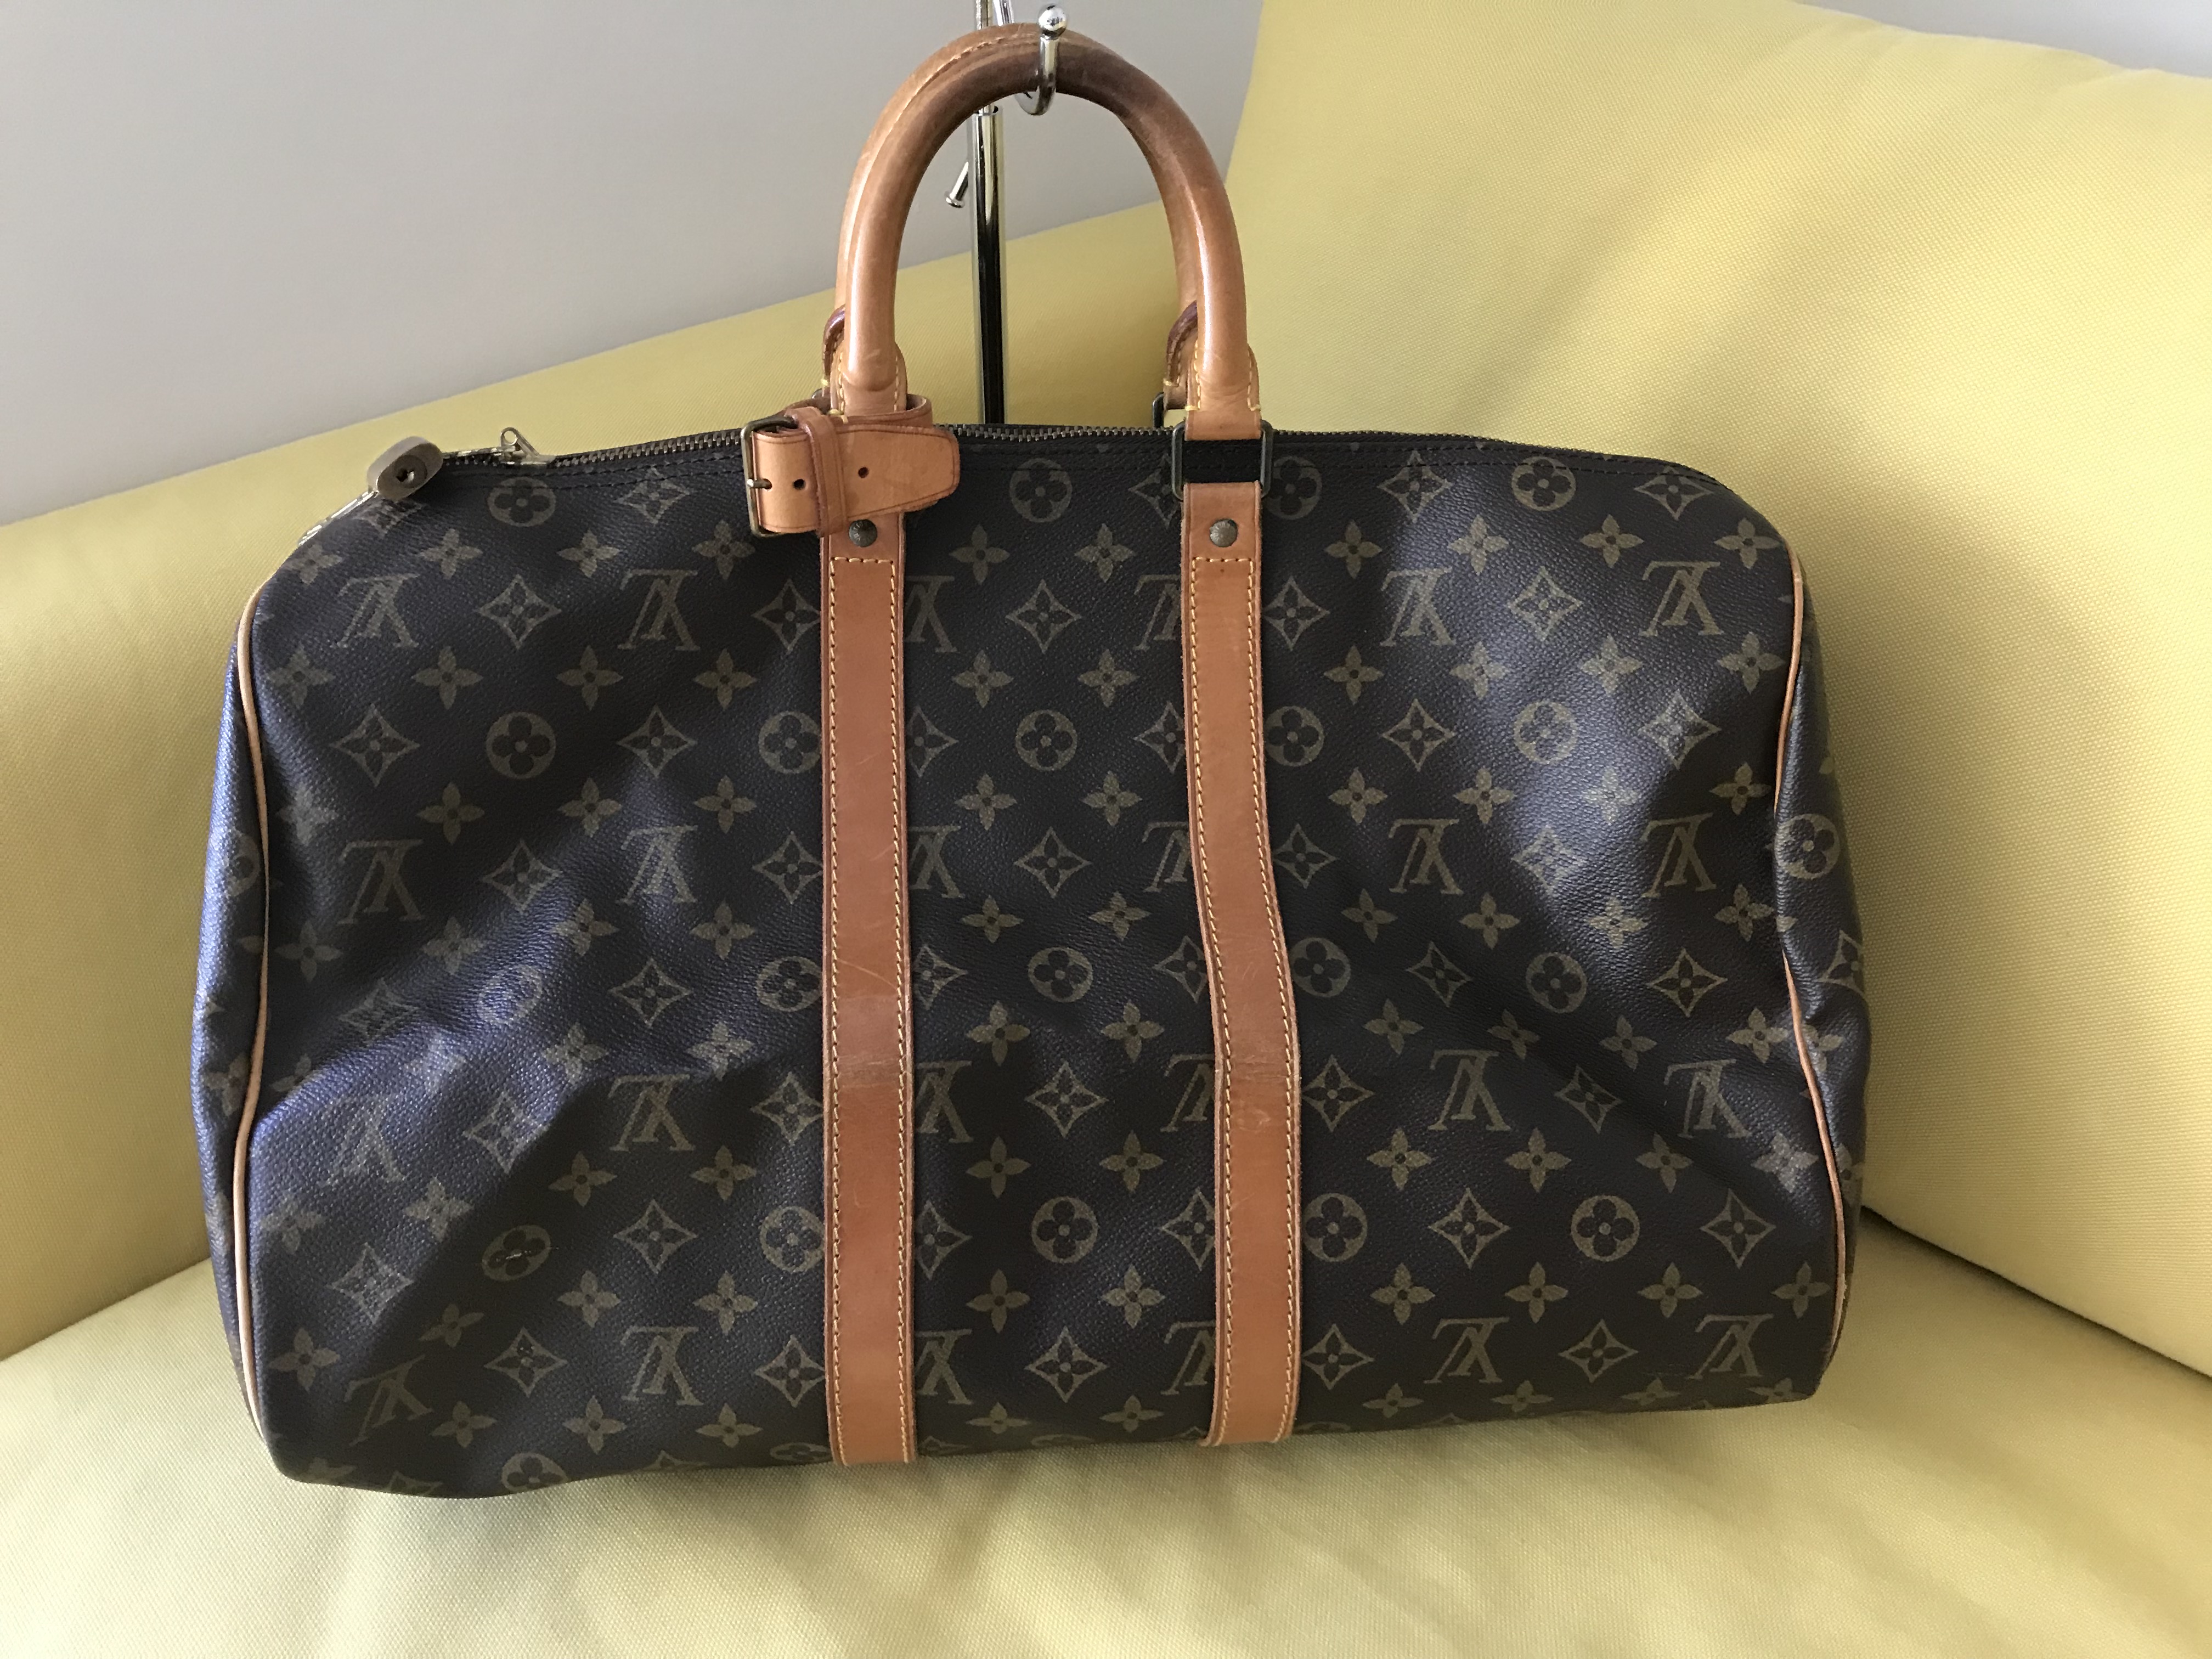 Louis Vuitton Monogram Keepall 45 Duffel Bag